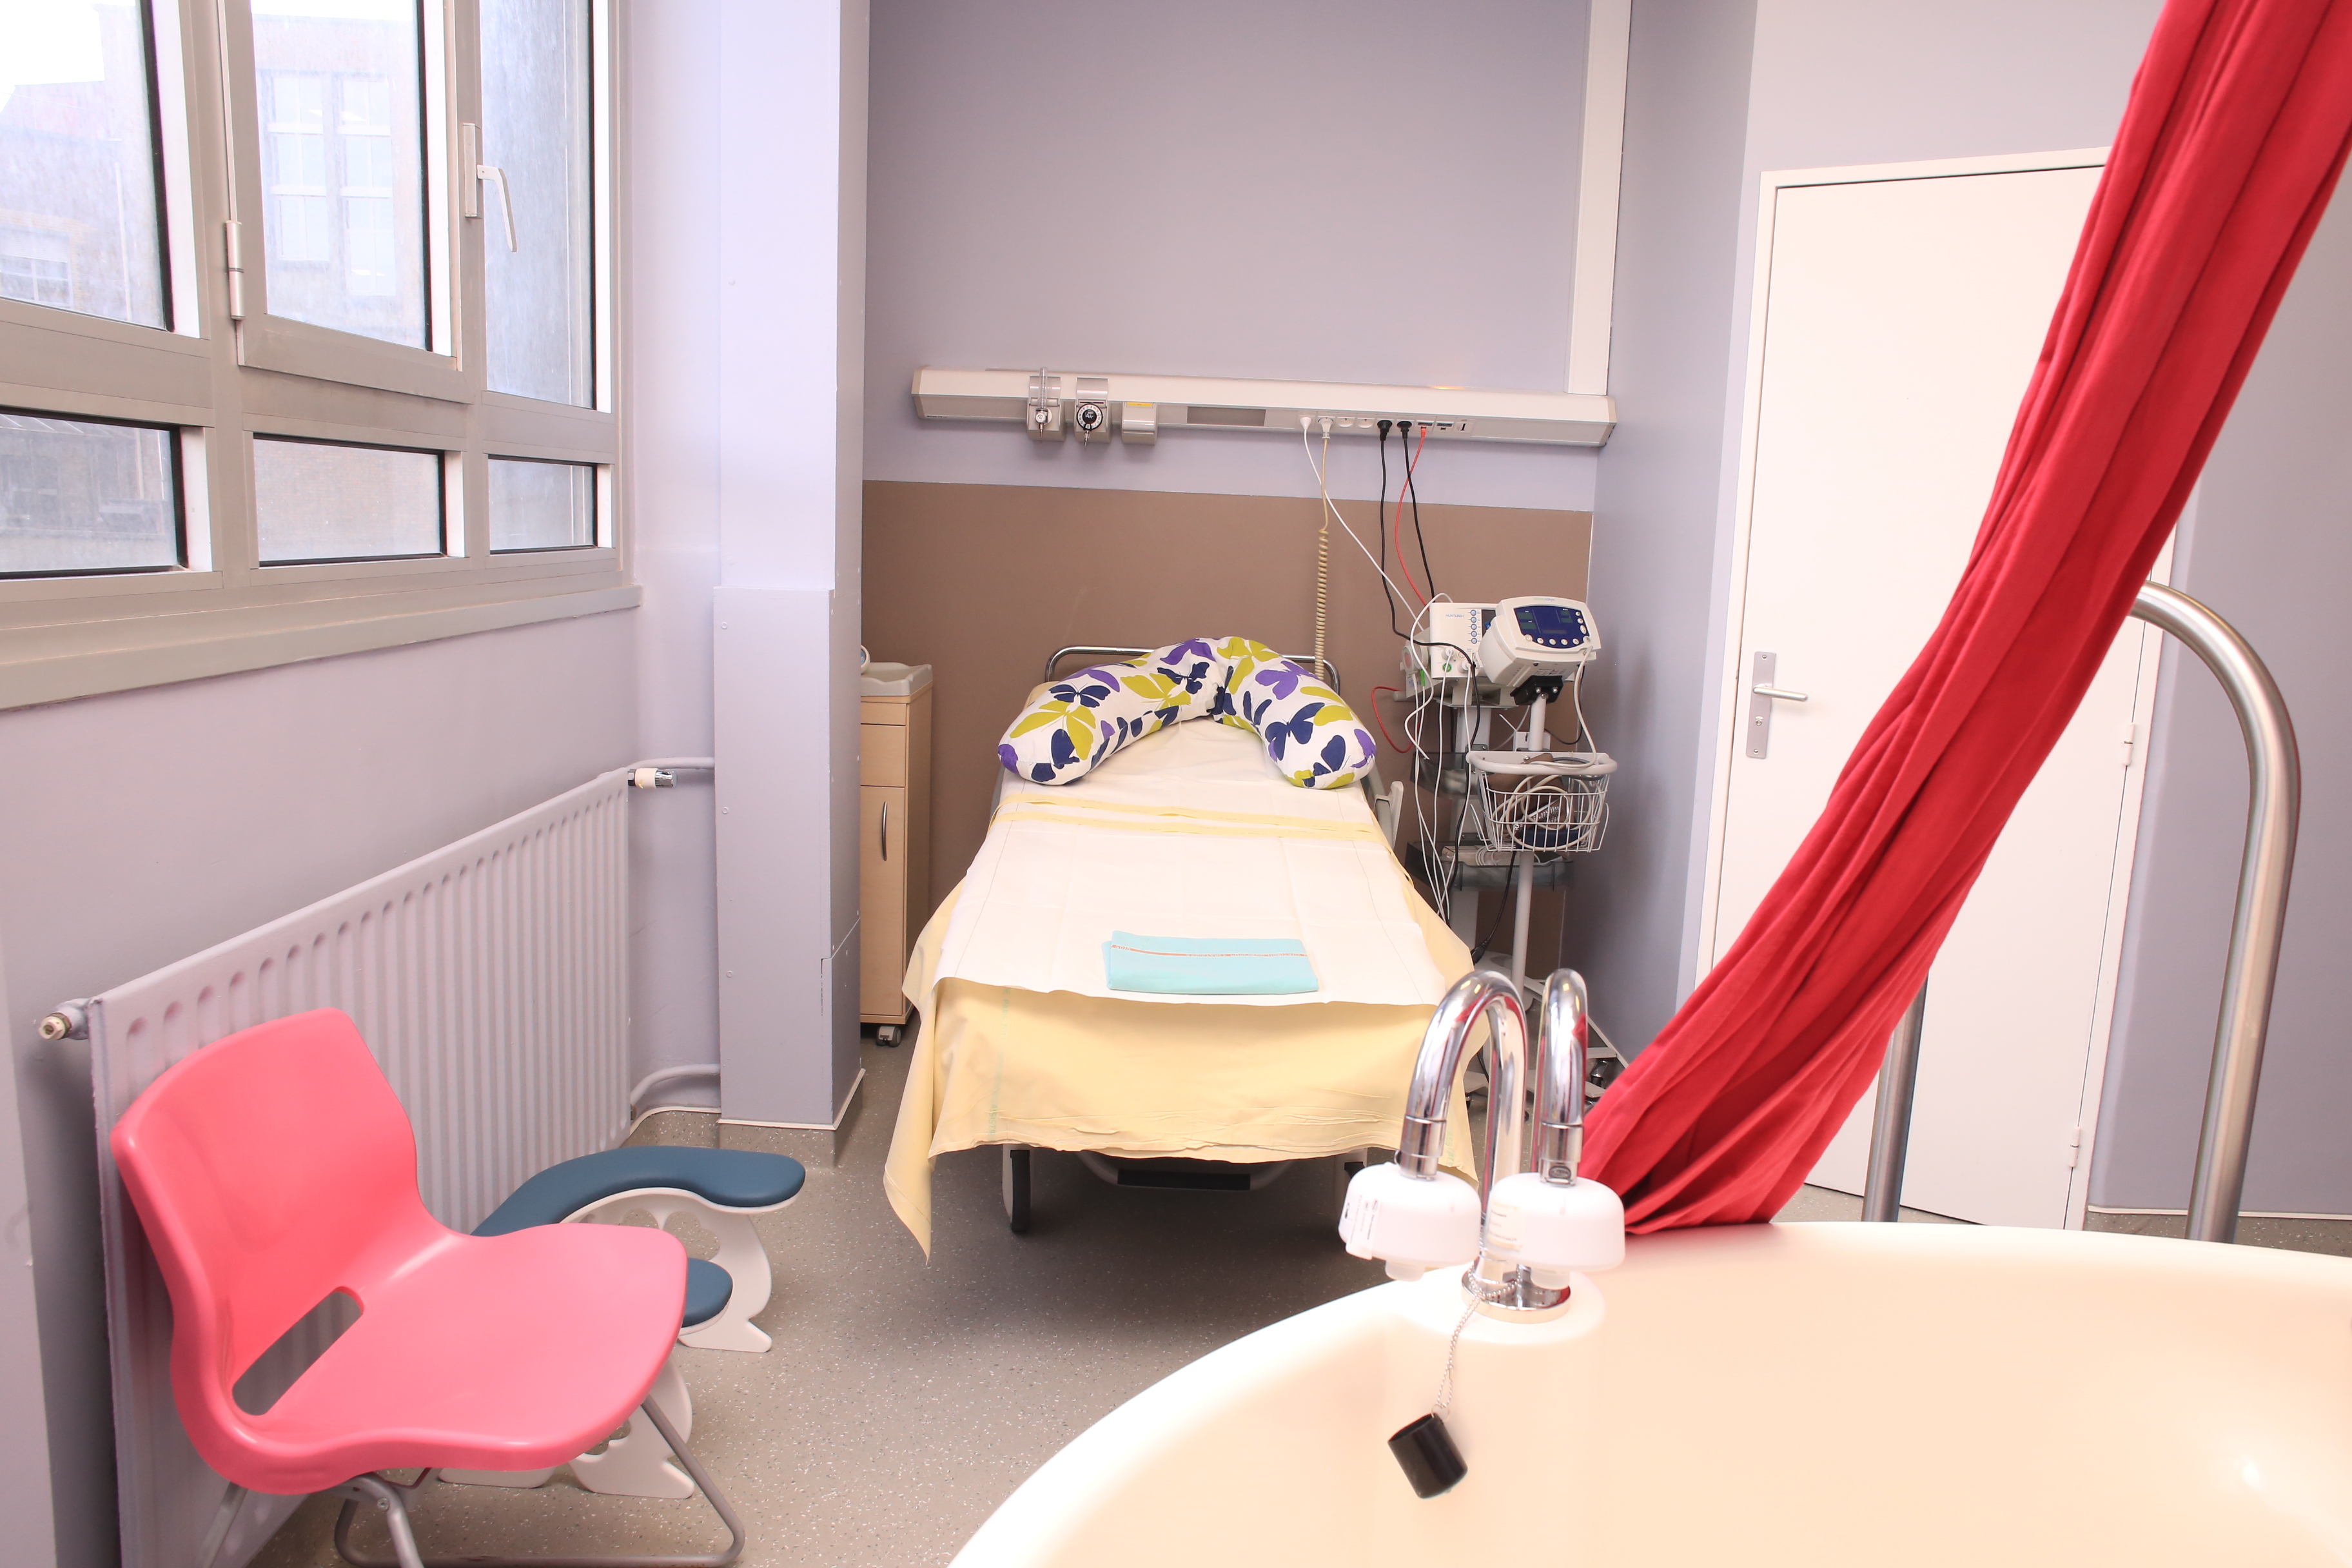 Salle physiologique - maternité hôpital Beaujon